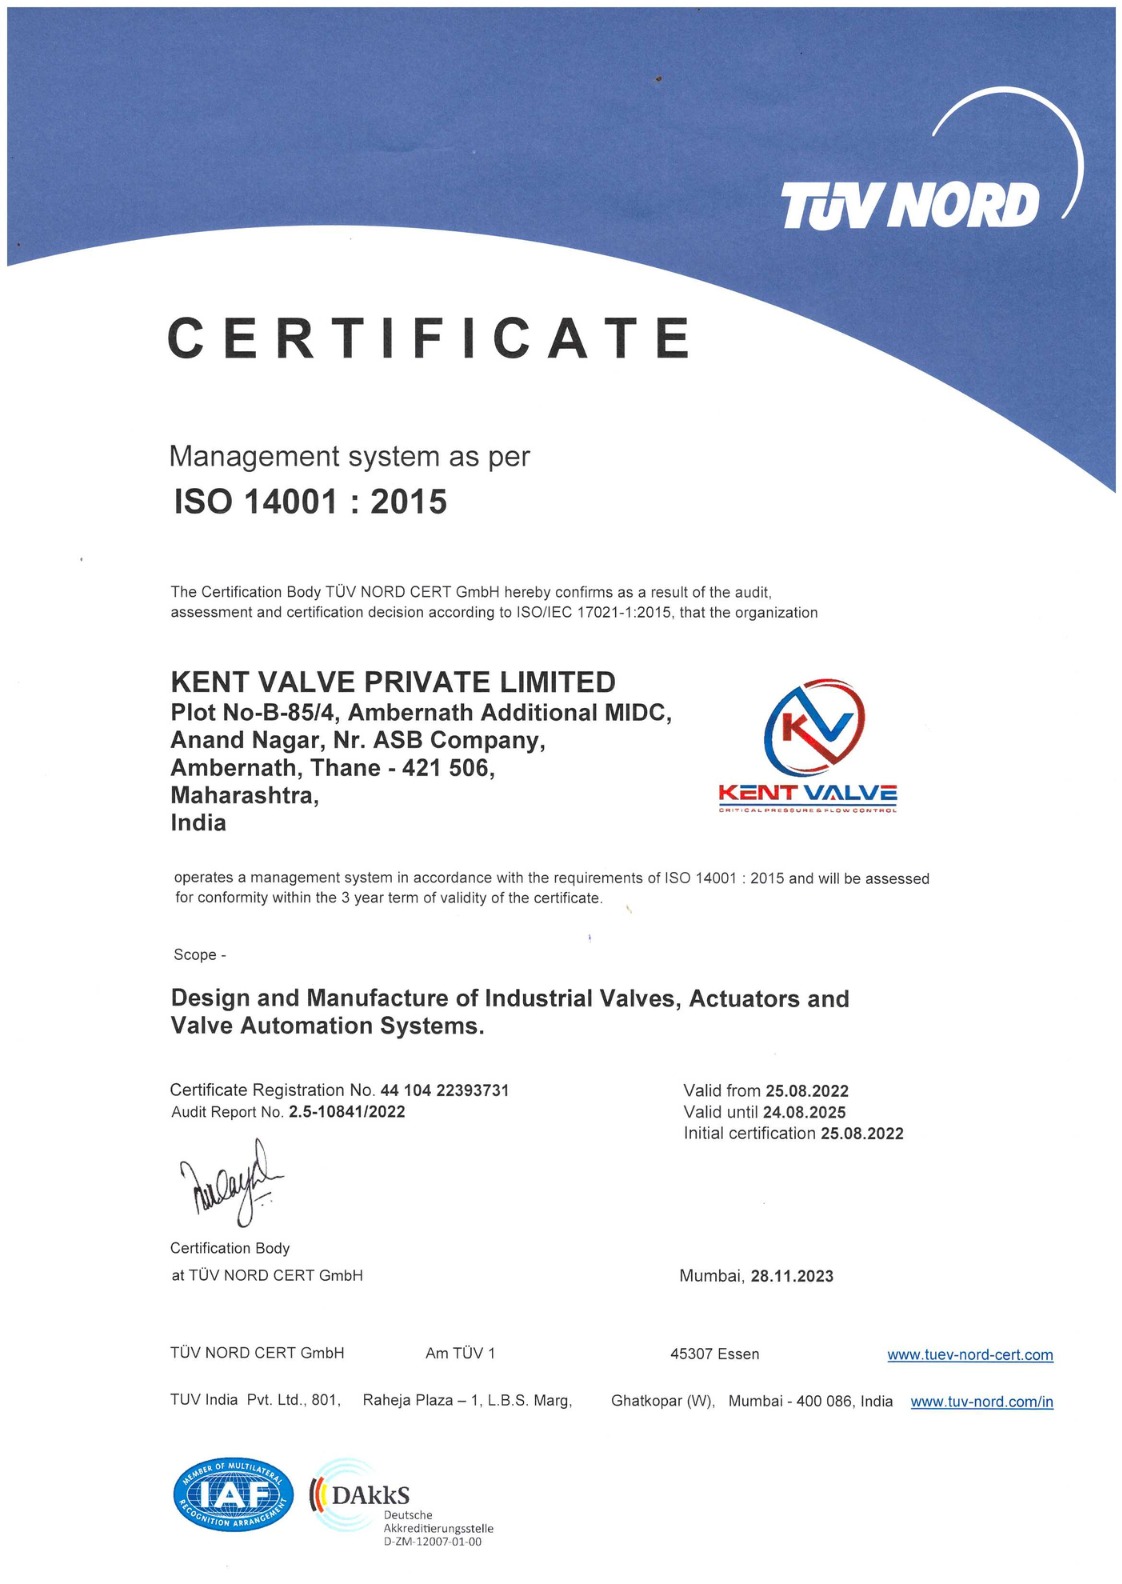 Kent Valve Certificate